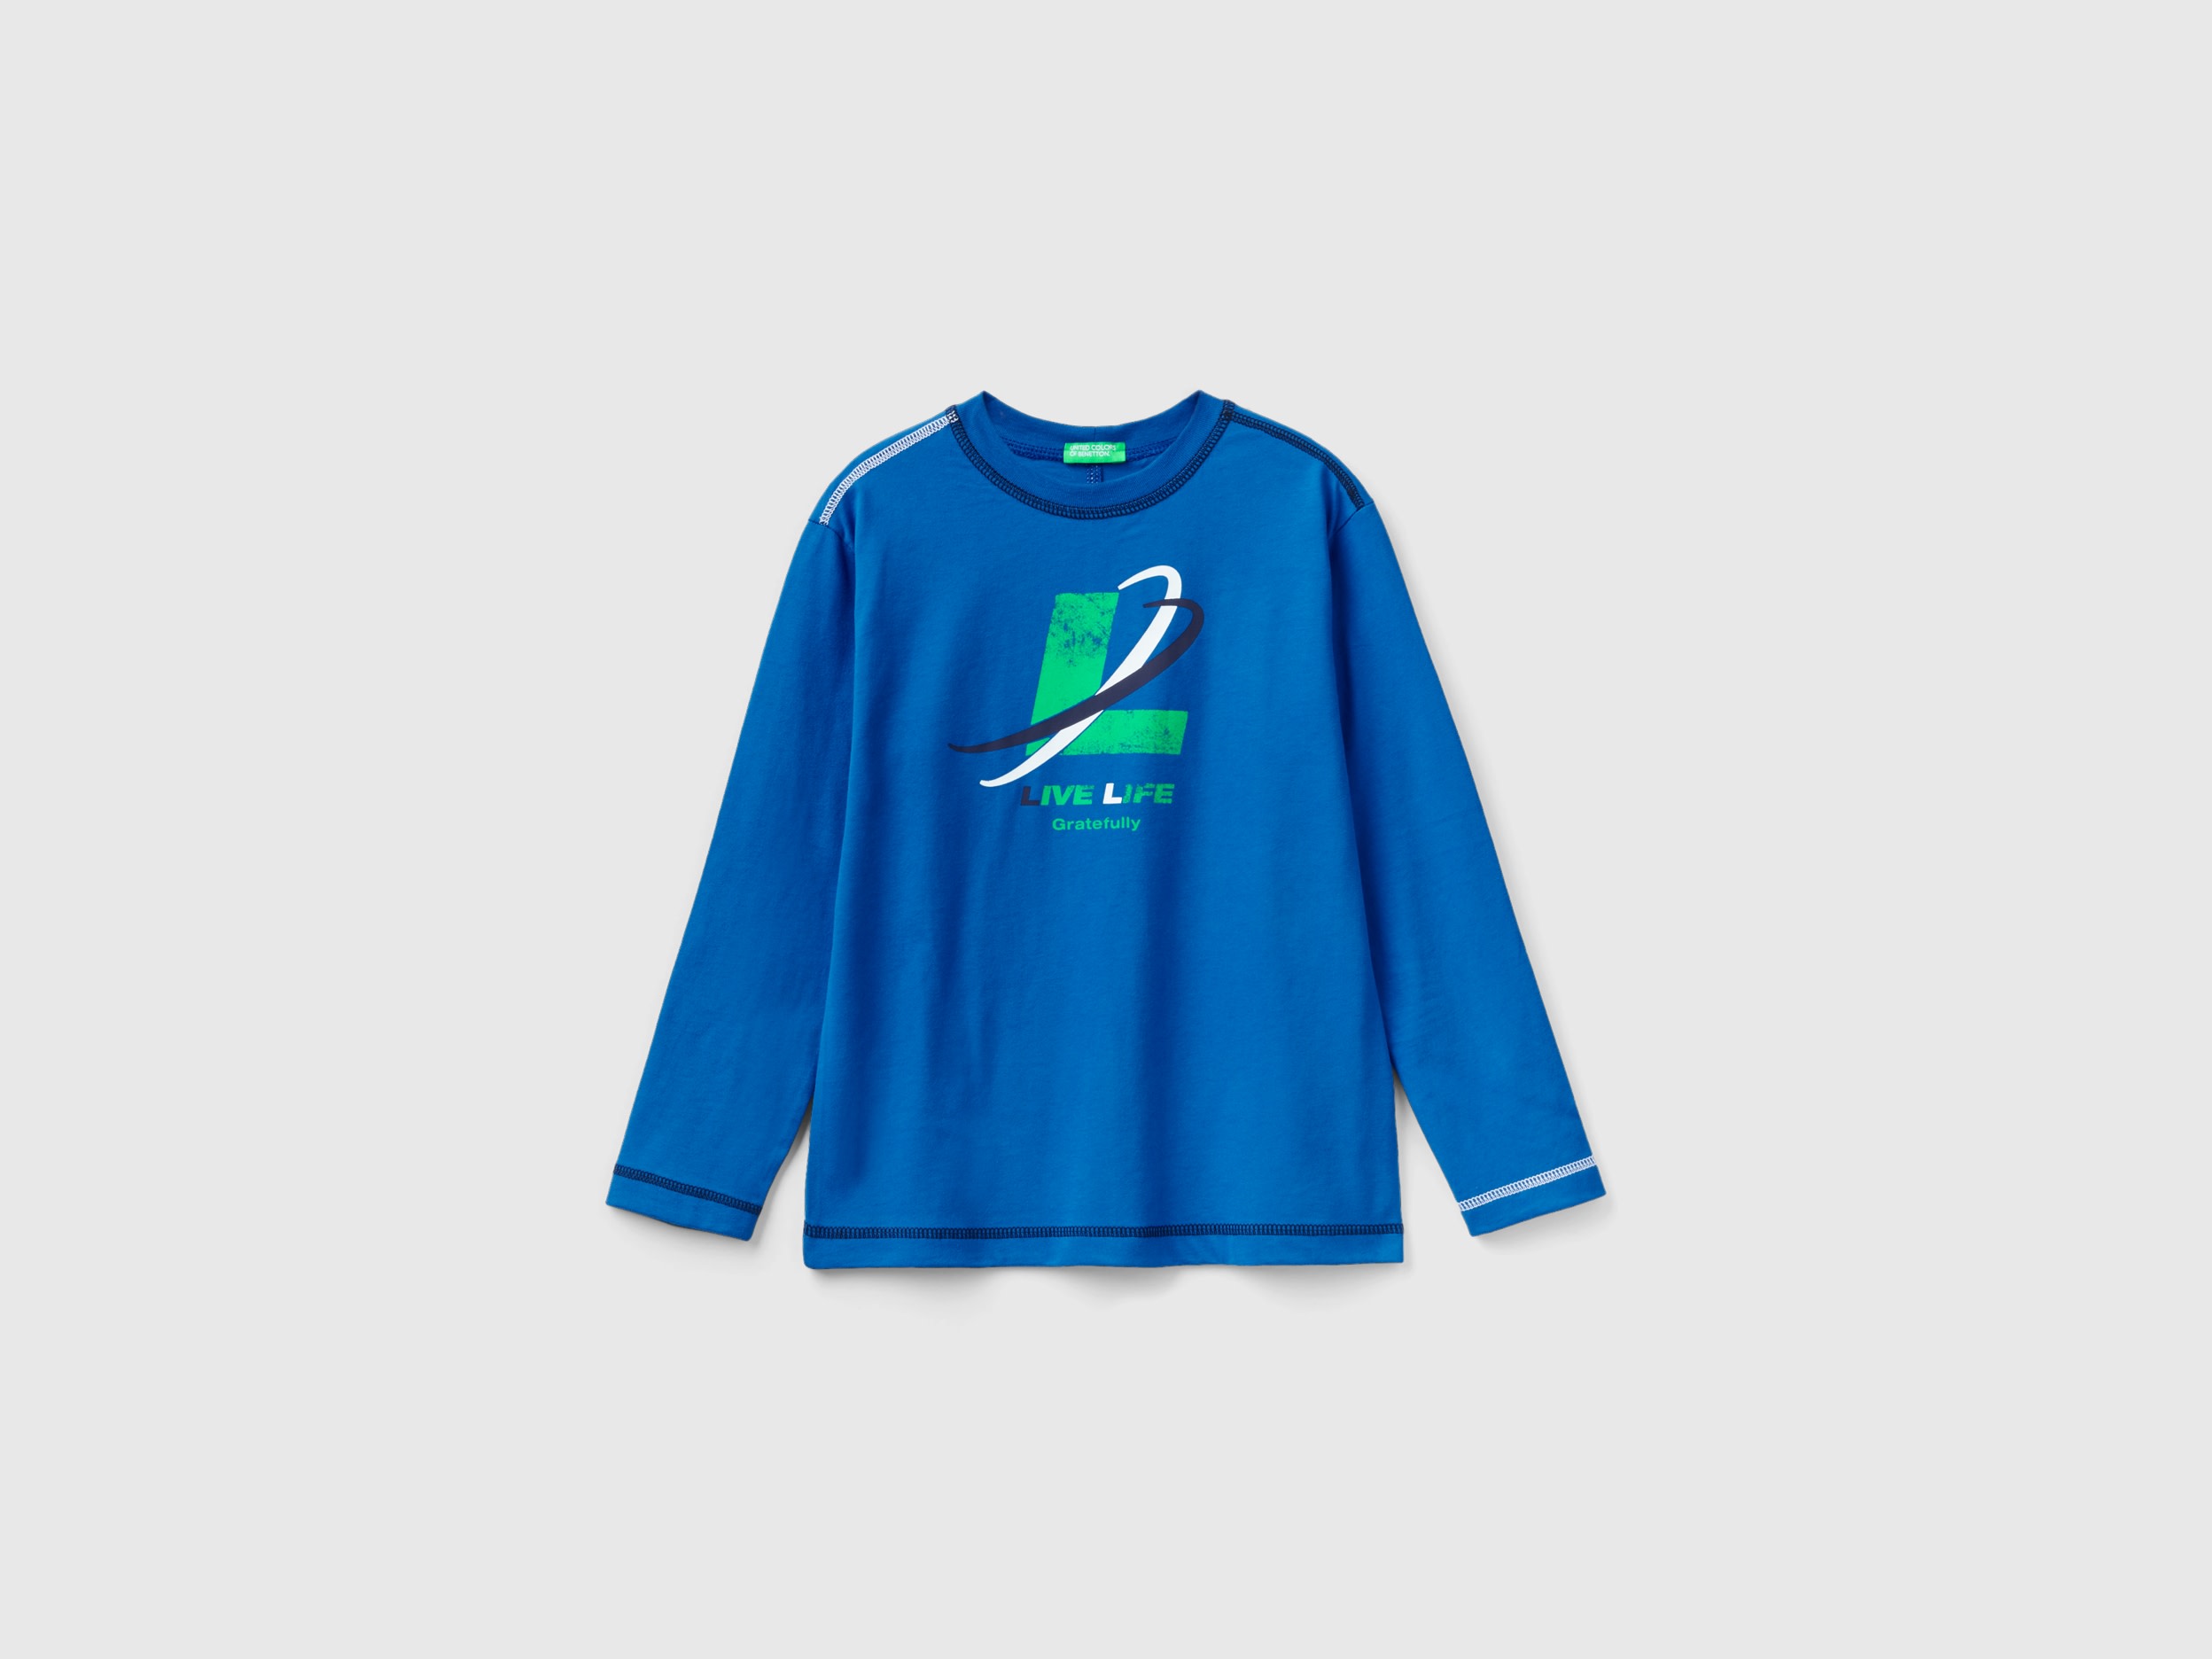 Benetton, T-shirt With Slogan Print, size 3XL, Bright Blue, Kids